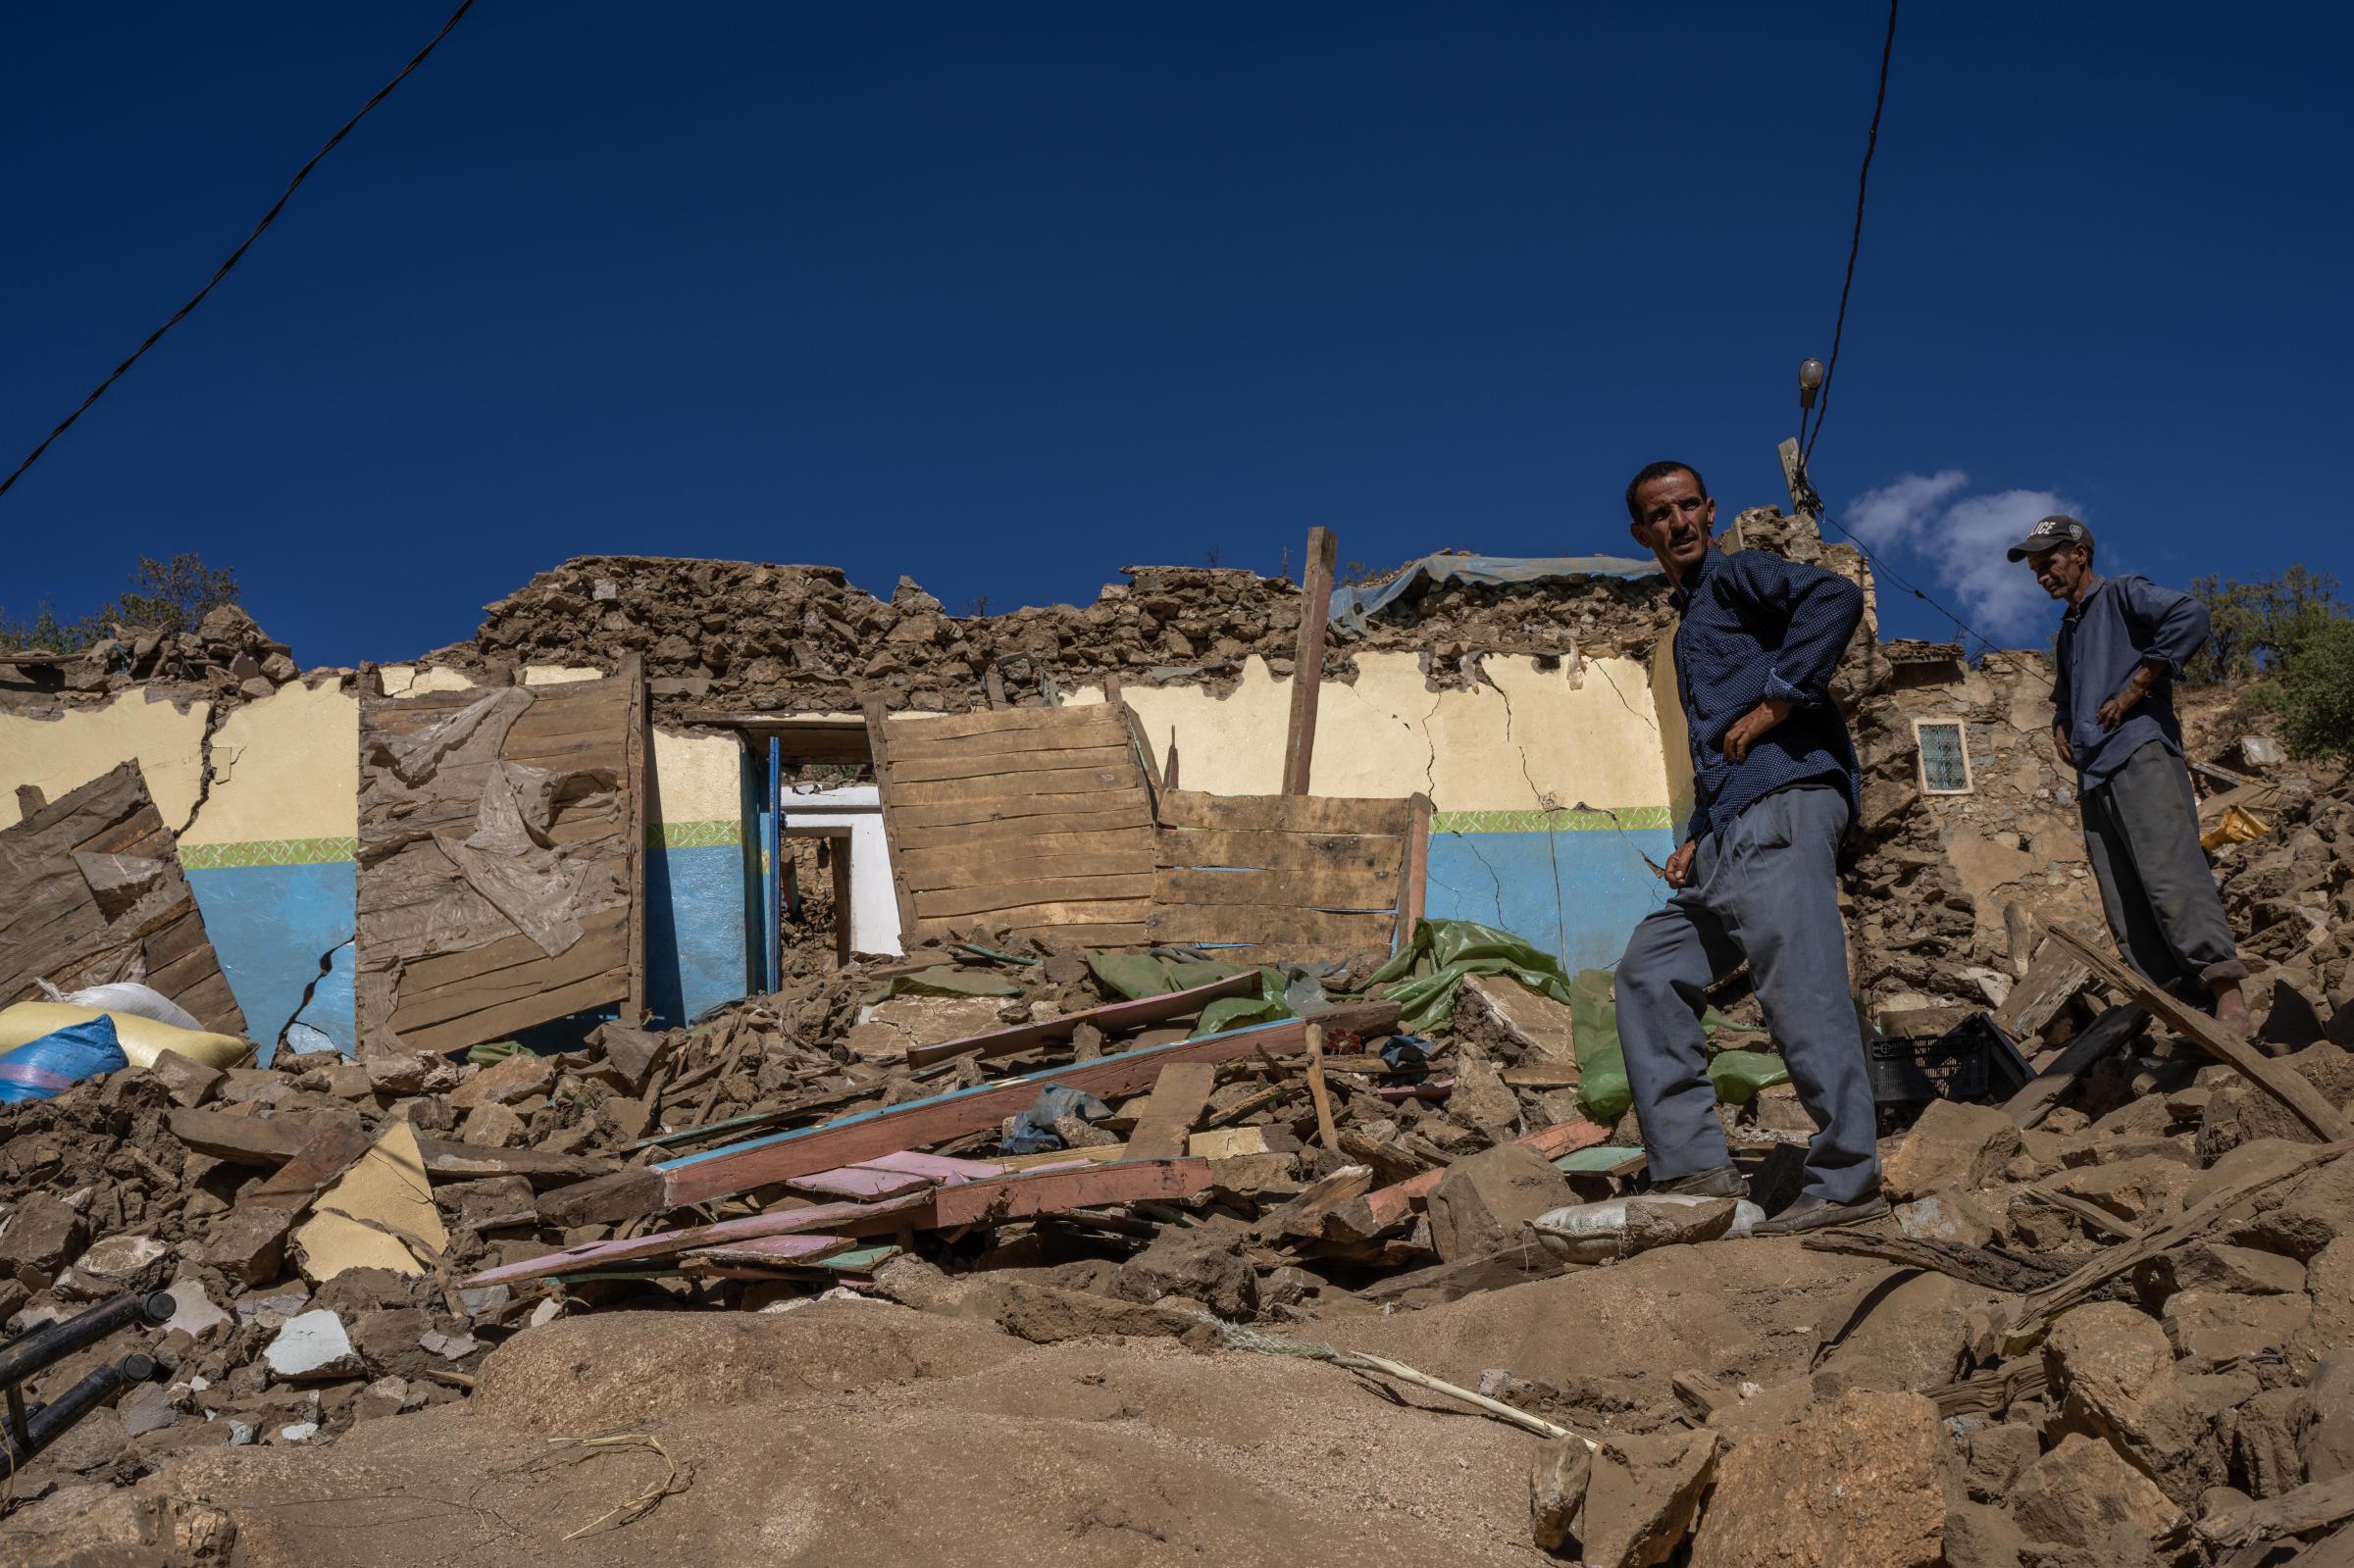 Morocco Earthquake - HOLD
Brahim Bel Haj, 38-year-old survivor of a deadly...